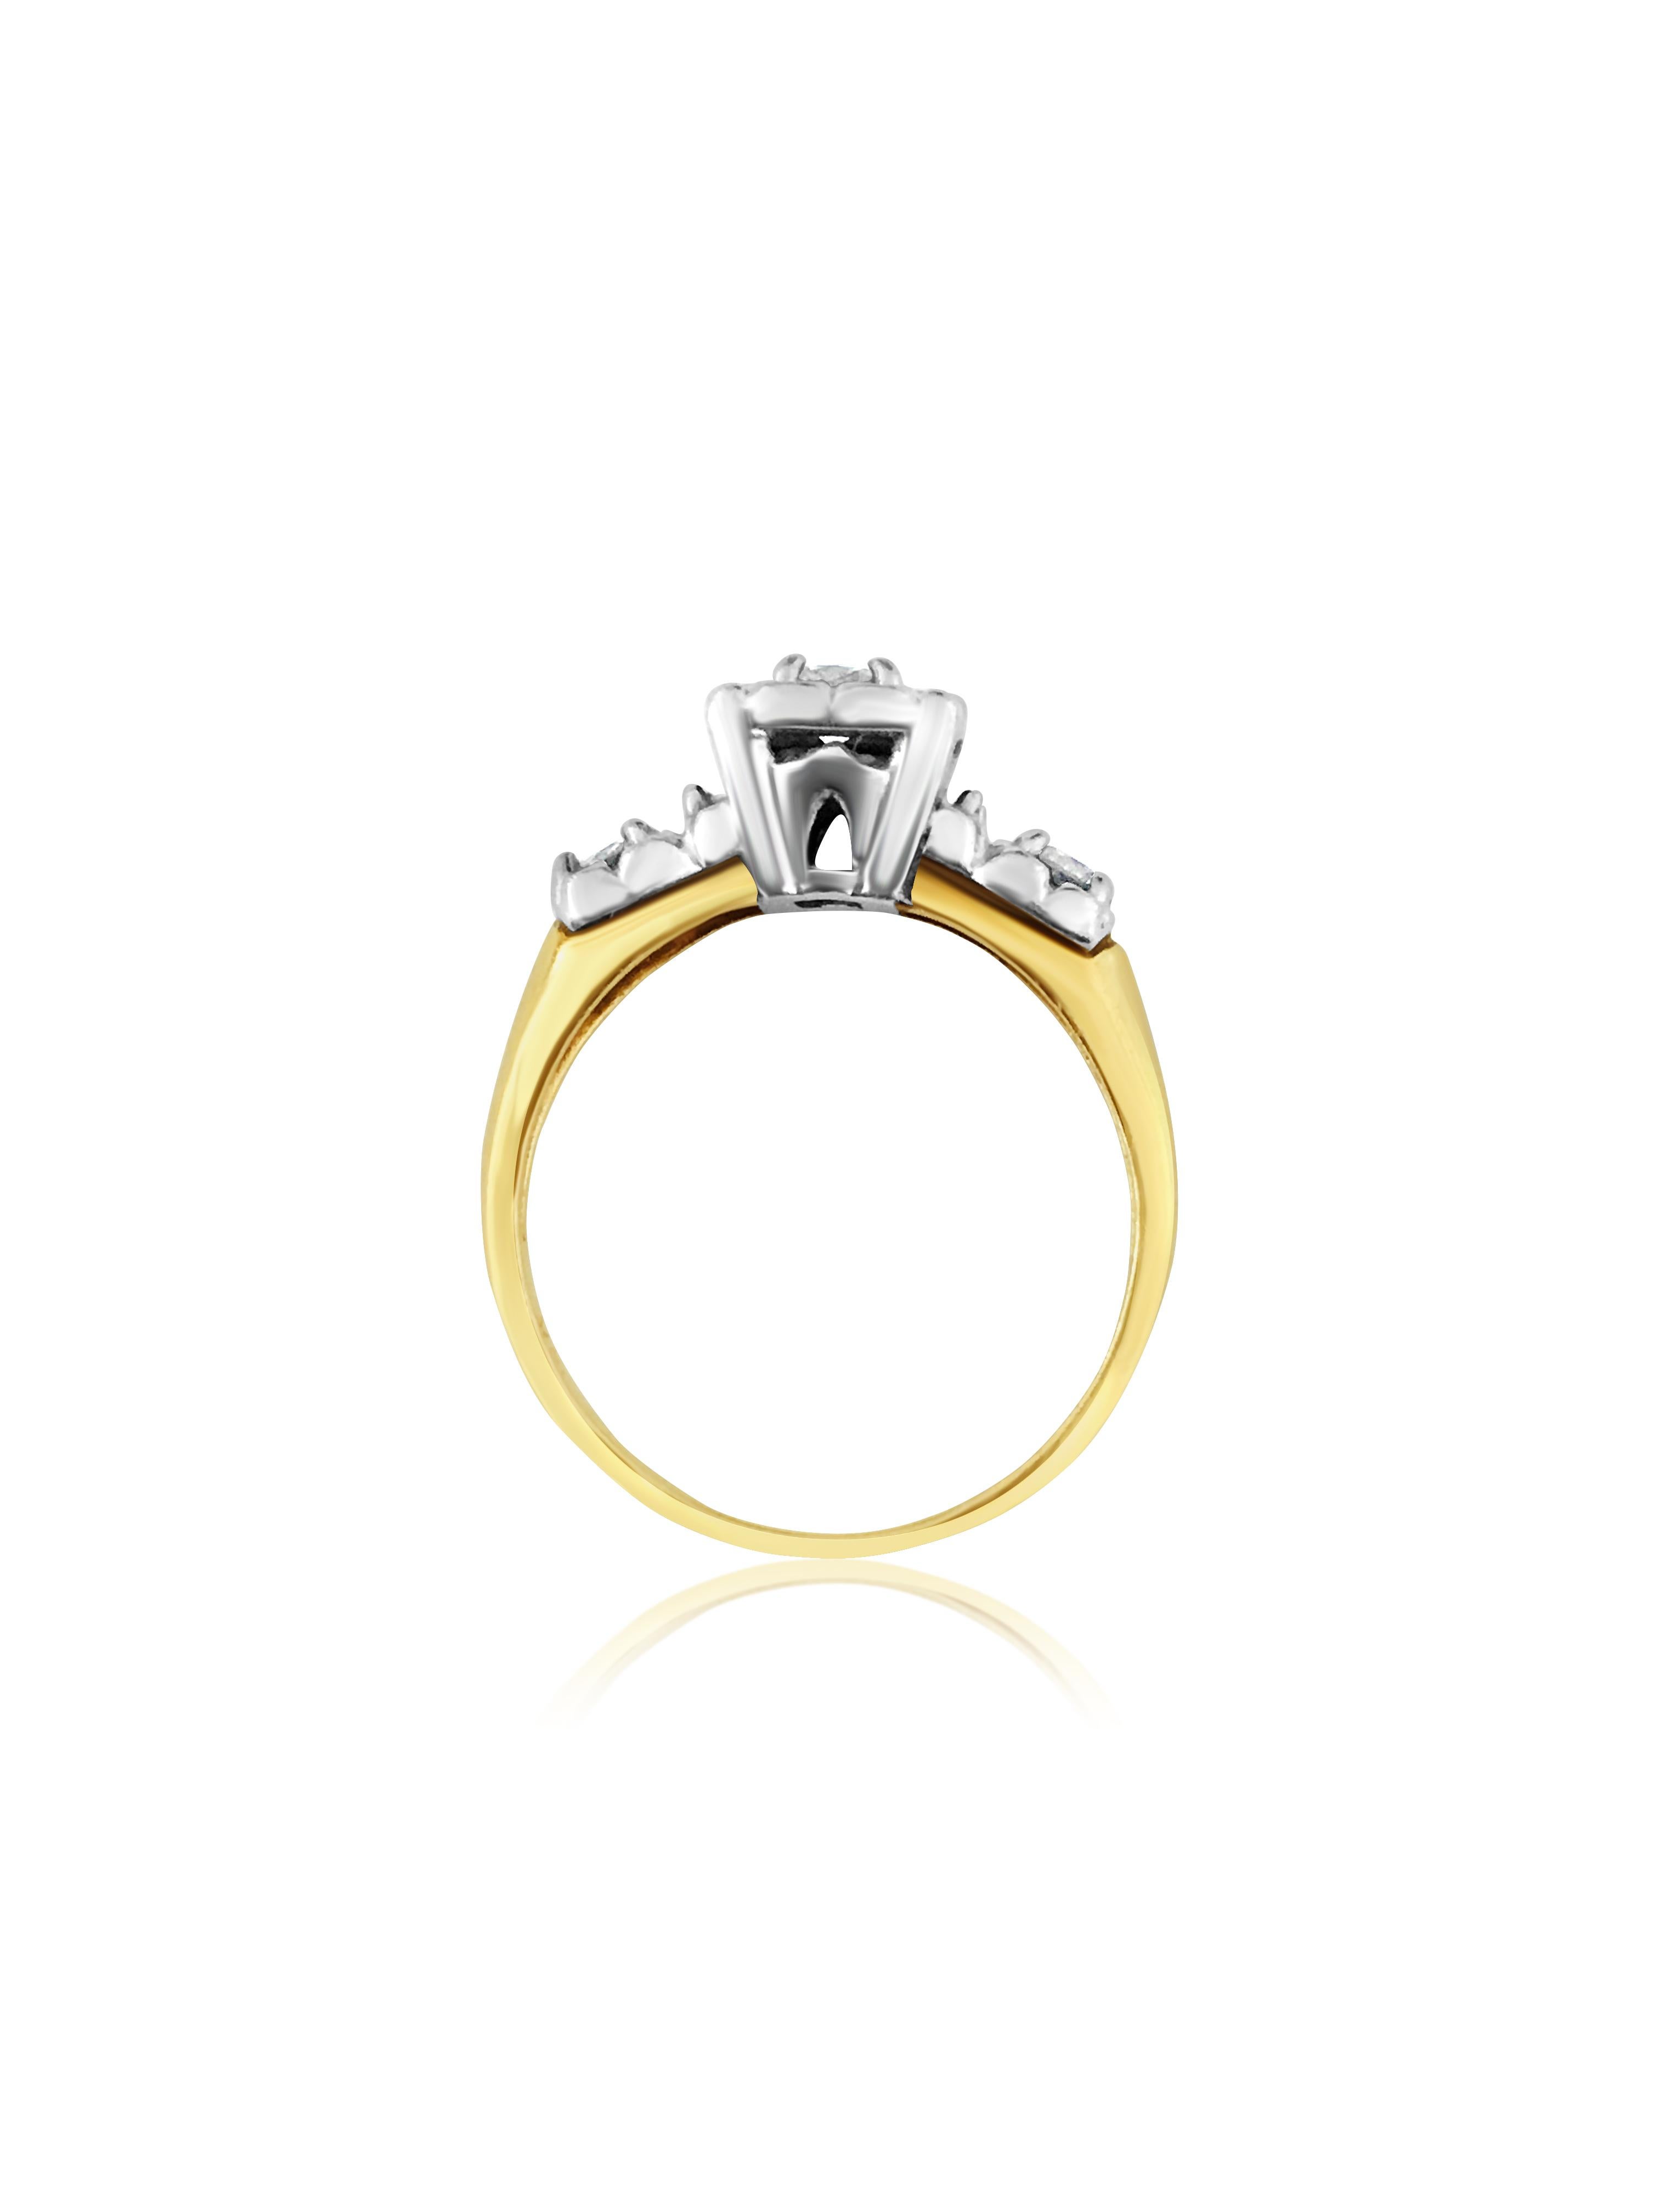 Women's Vintage Flower Design 0.37 Carat Diamond Gold Engagement Ring For Sale